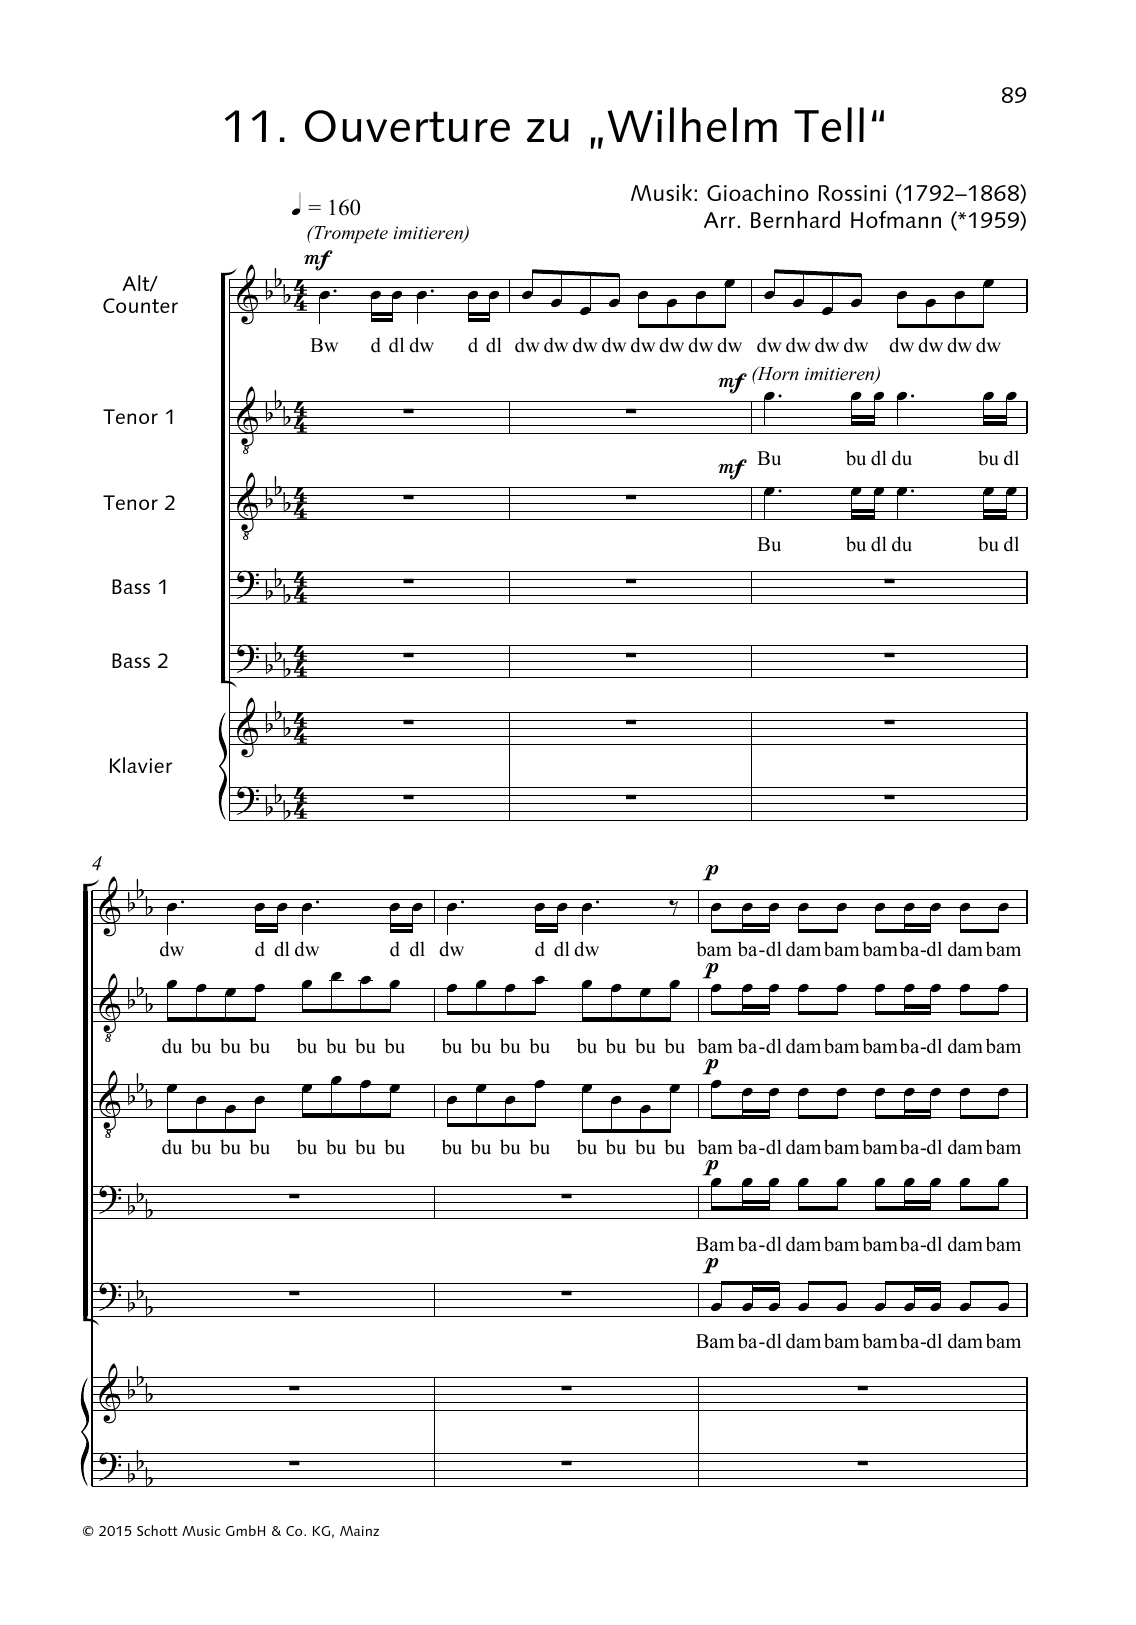 Download Gioacchino Rossini Ouverture zu Wilhelm Tell Sheet Music